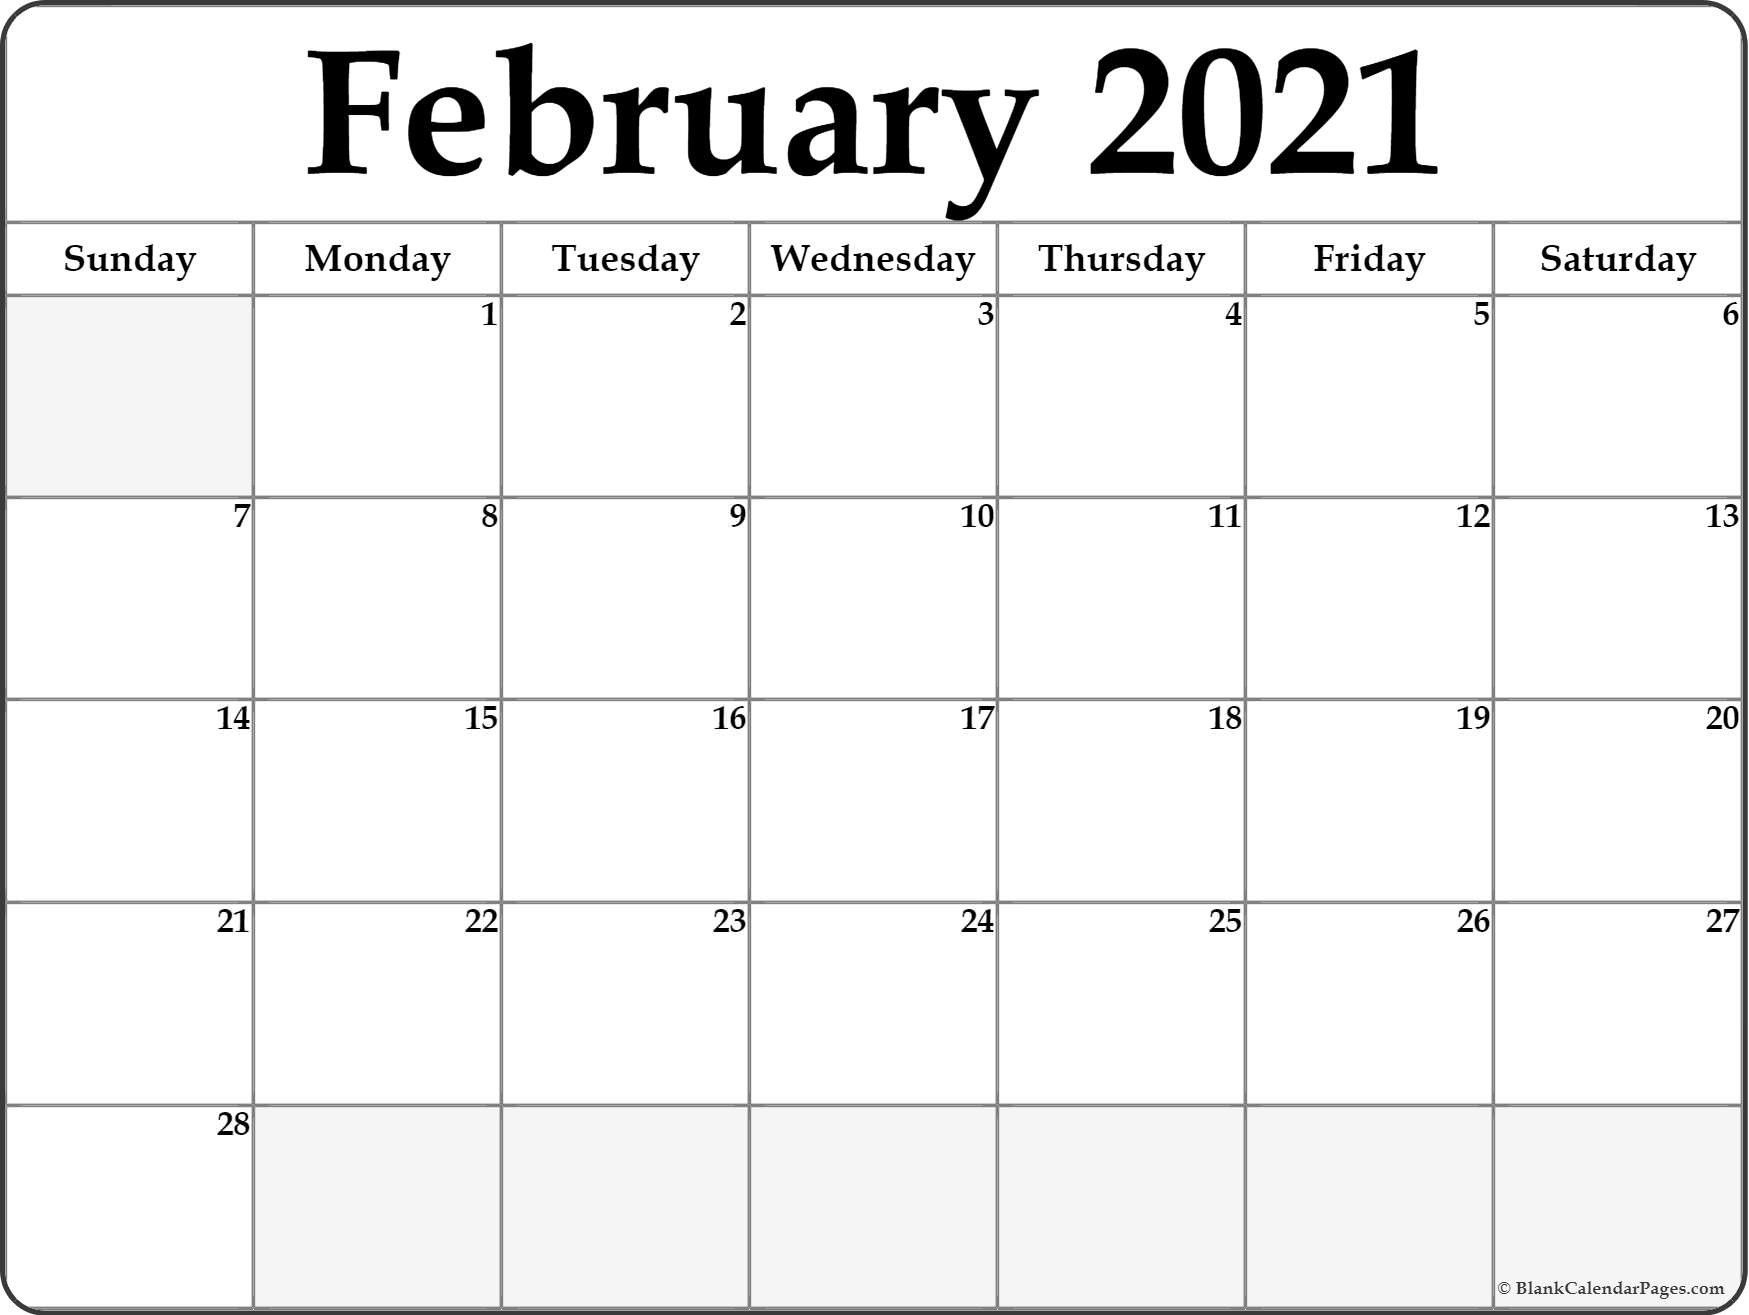 Calendar February 2021 Editable Planner In 2020 | Calendar